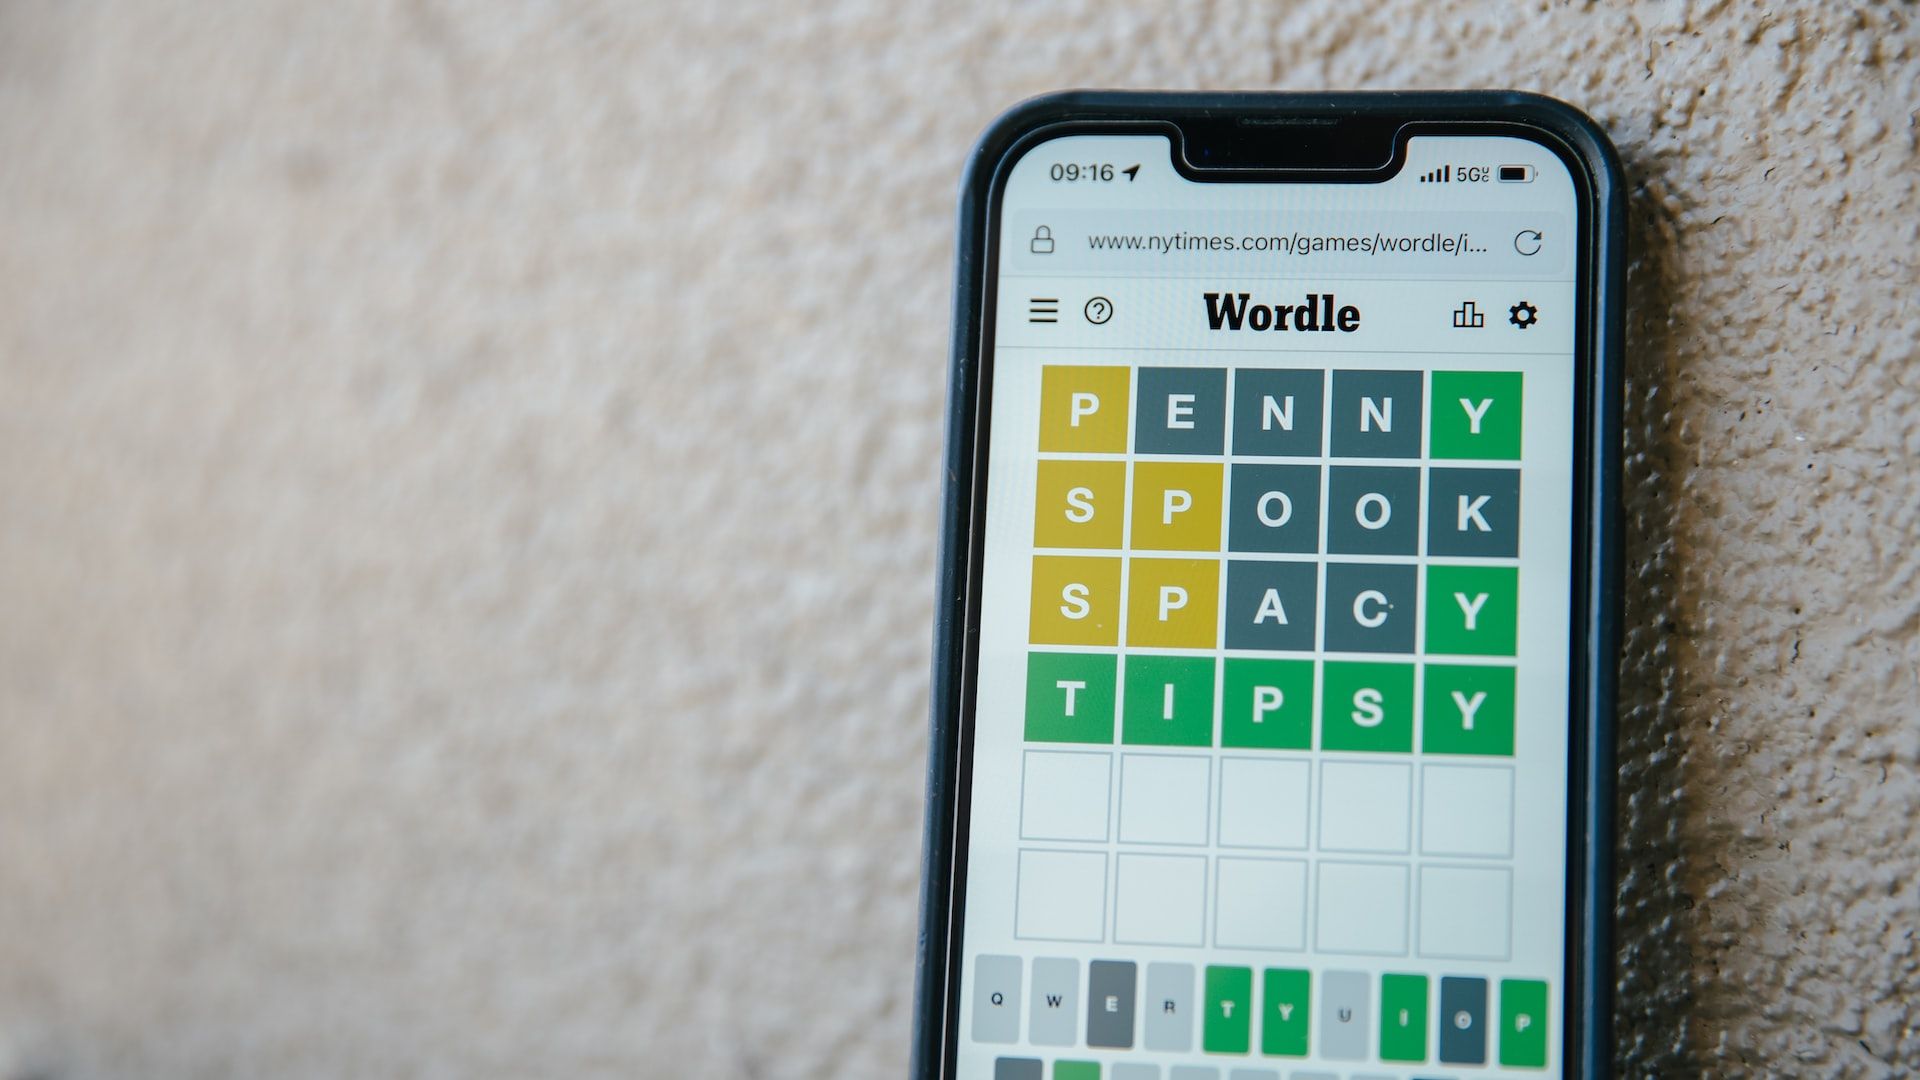 Wordle-puzzeltips op iPhone